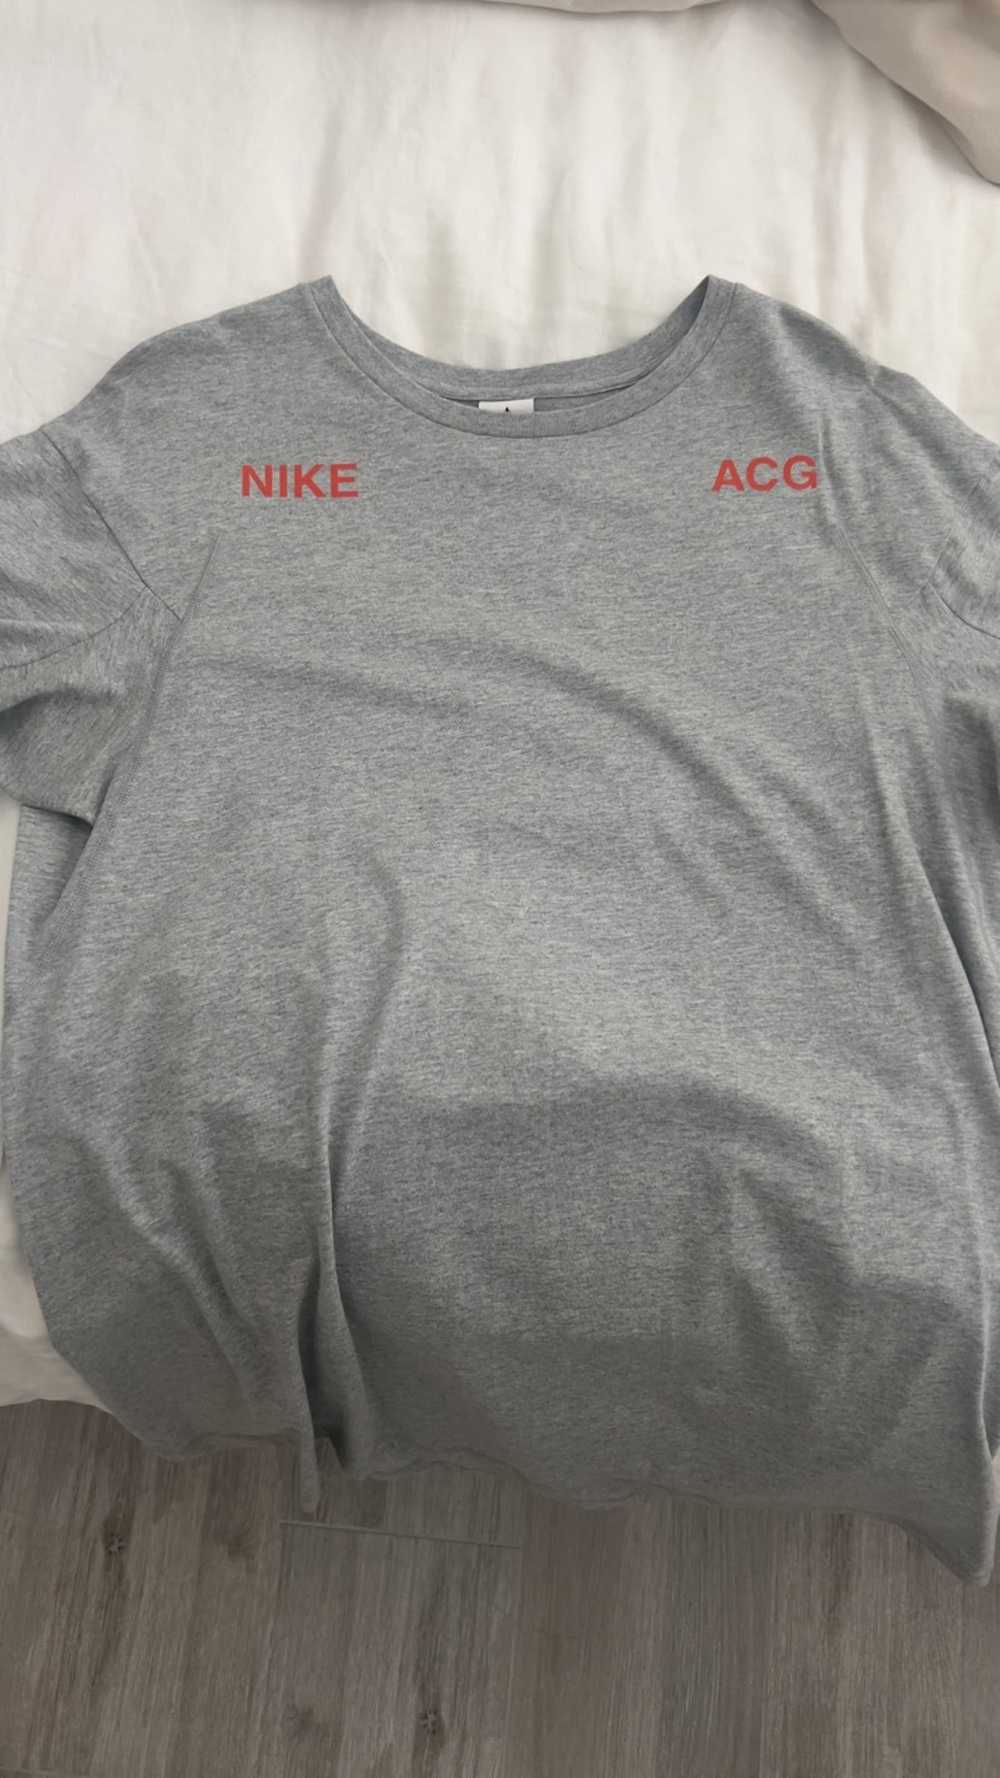 Nike ACG NikeLab ACG Tee (M, Grey) - image 1